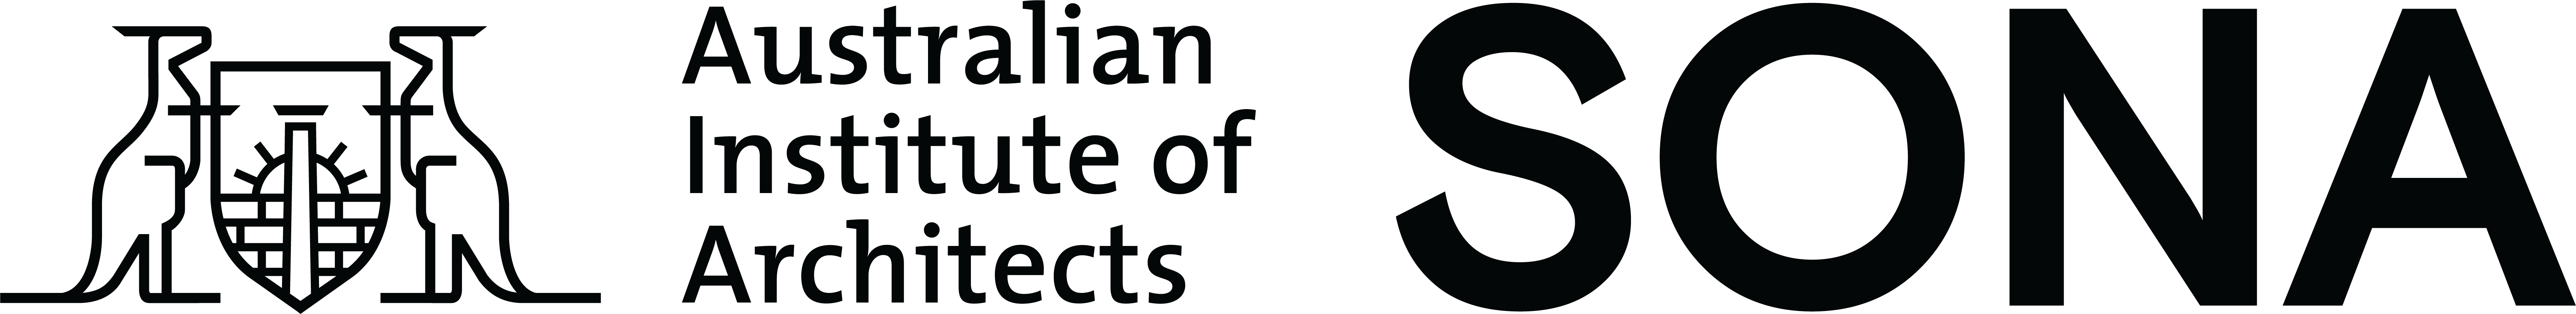 Australian Institute of Architects, SONA logo